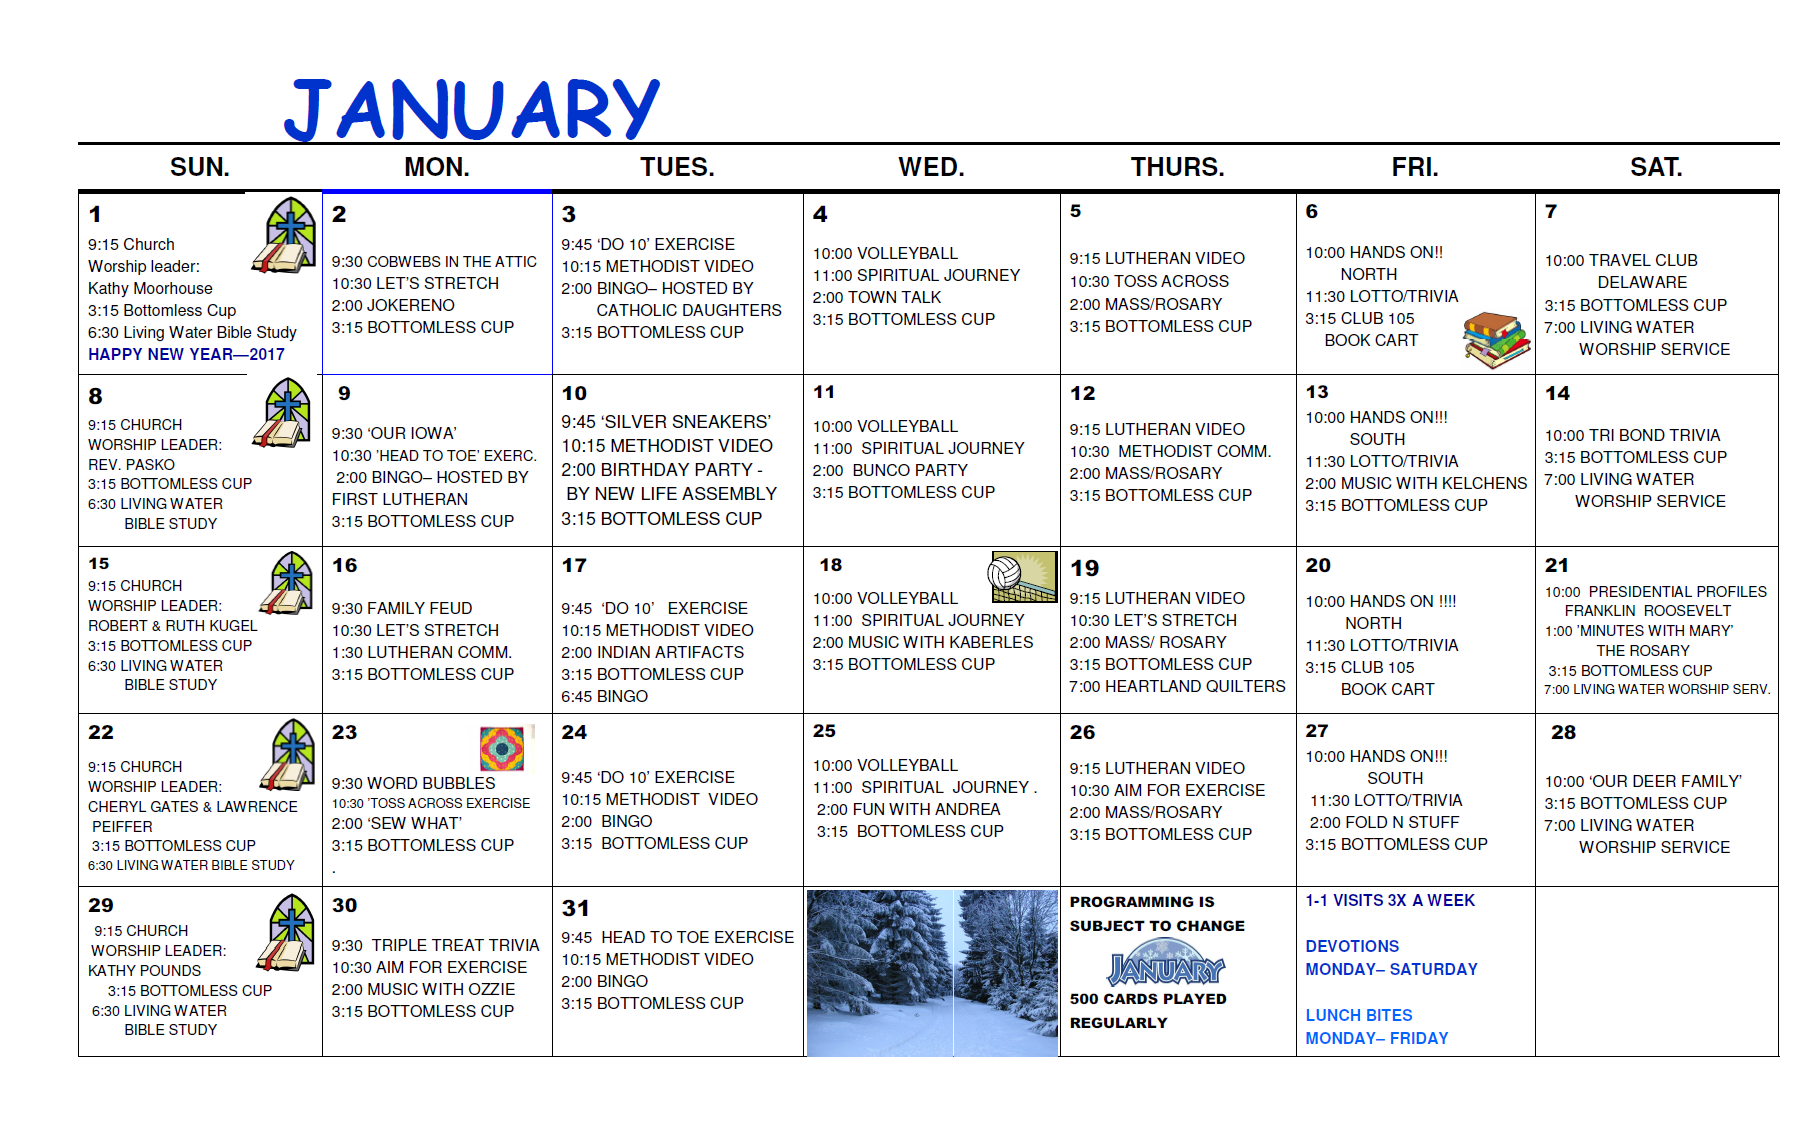 Monthly Activity Calendar main image